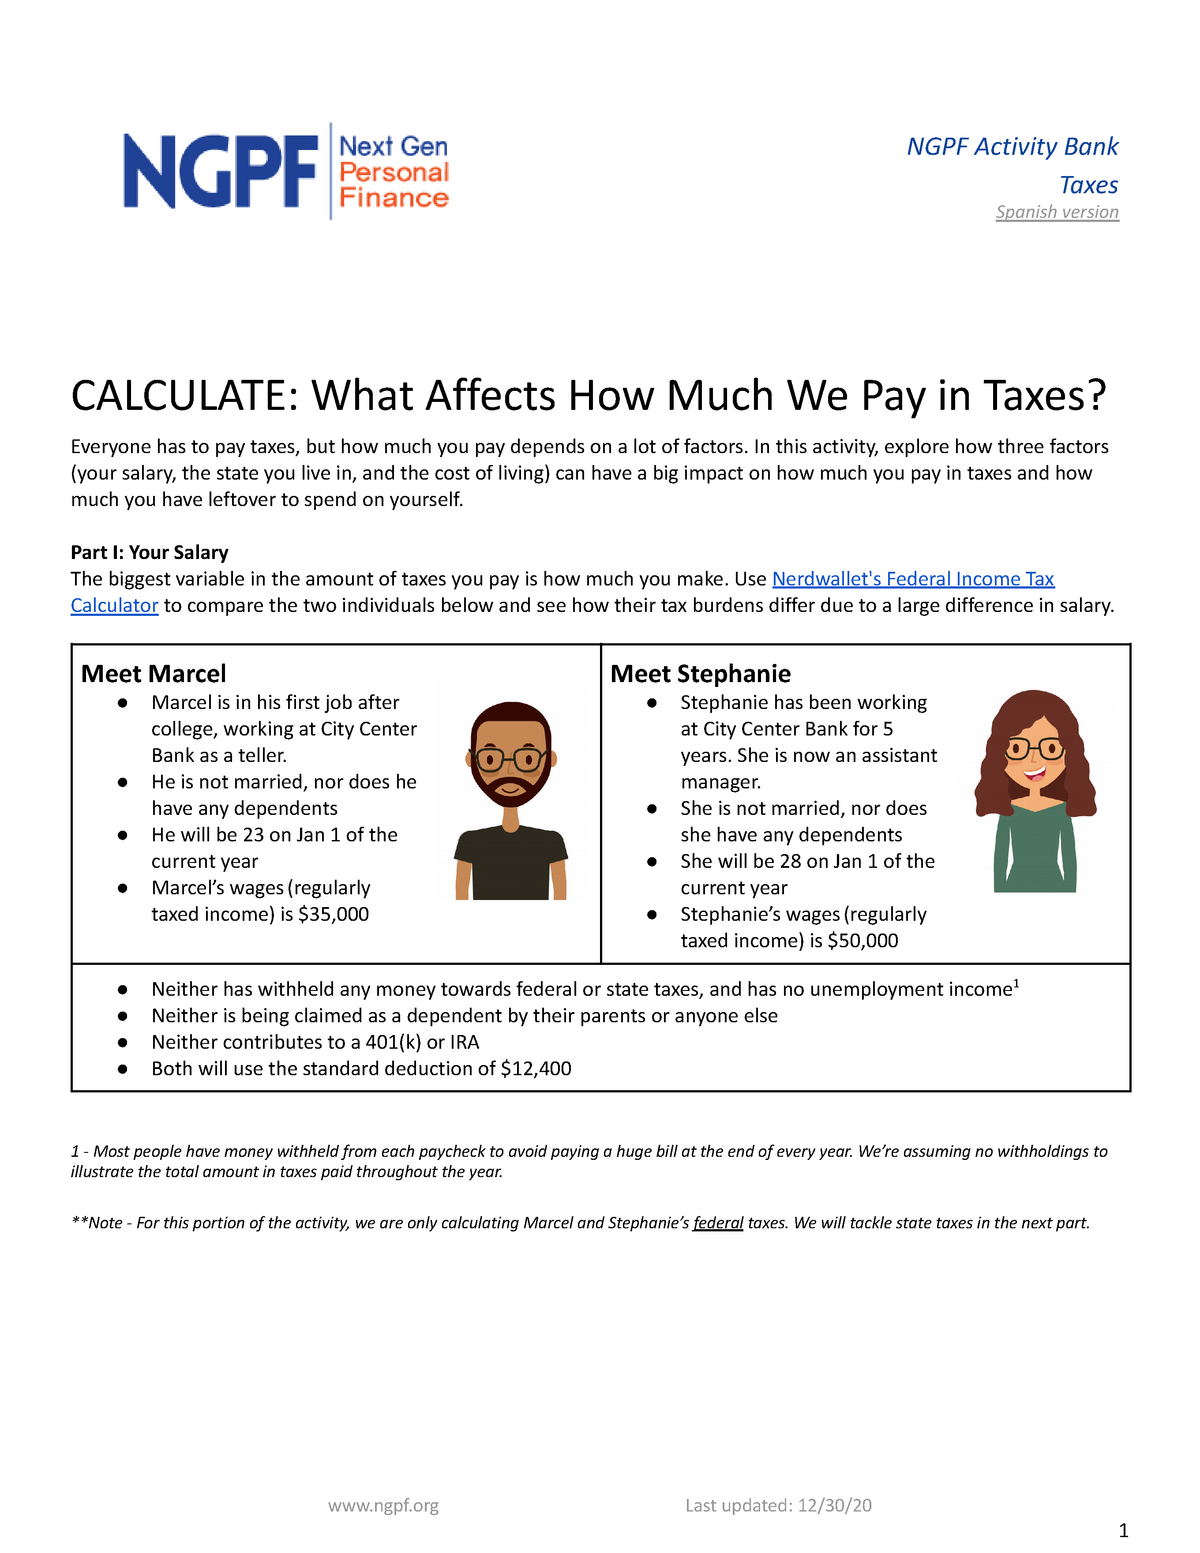 ngpf case study taxes answer key